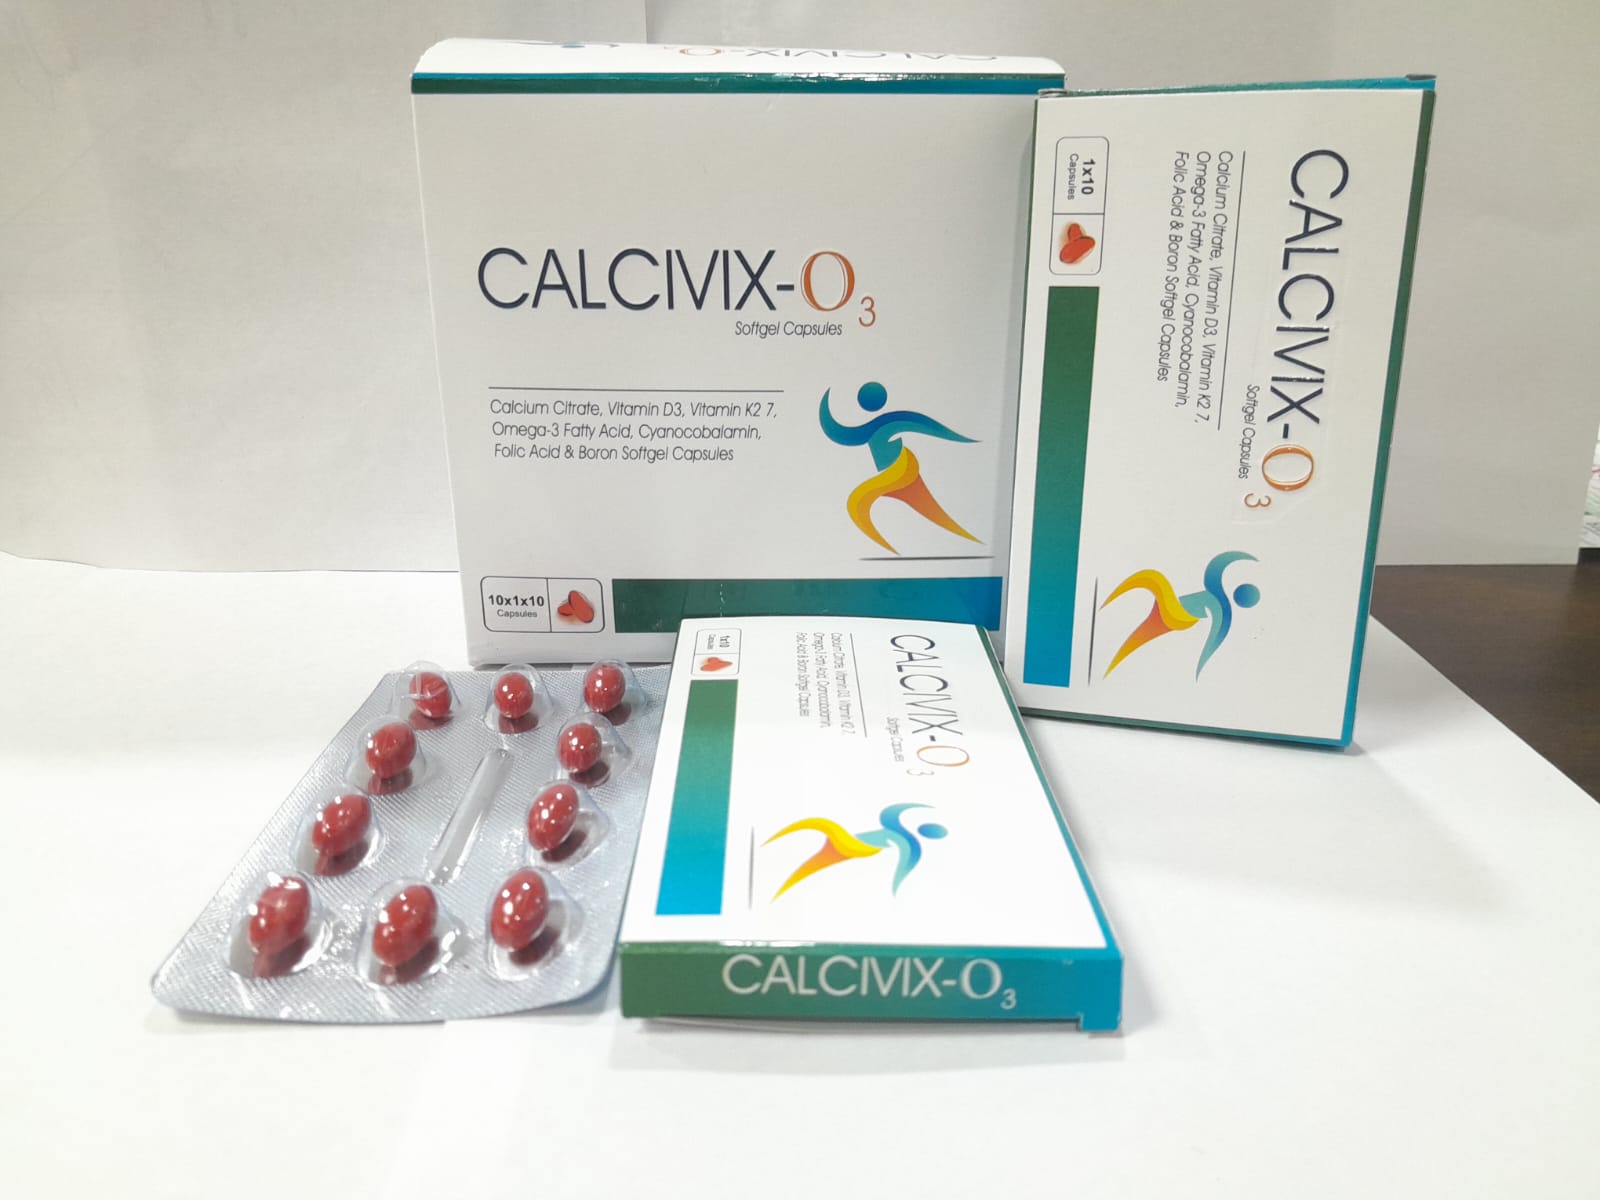 Product Name: CALCIVIX O3 Softgel Capsules, Compositions of are Calcim Citrate 500 mg (Eq. to Elemental Calcium 105 mg), Vitamin D3 400 IU, Vitamin K2 7 45 mcg, Omega-3 Fatty Acid contains : Eicosapentaenoic Acid (EPA) 90 mg, Docosahexaenoic Acid (DHA) 60 mg, Cyanocobalamin 1 mcg, Folic A - Feravix Lifesciences